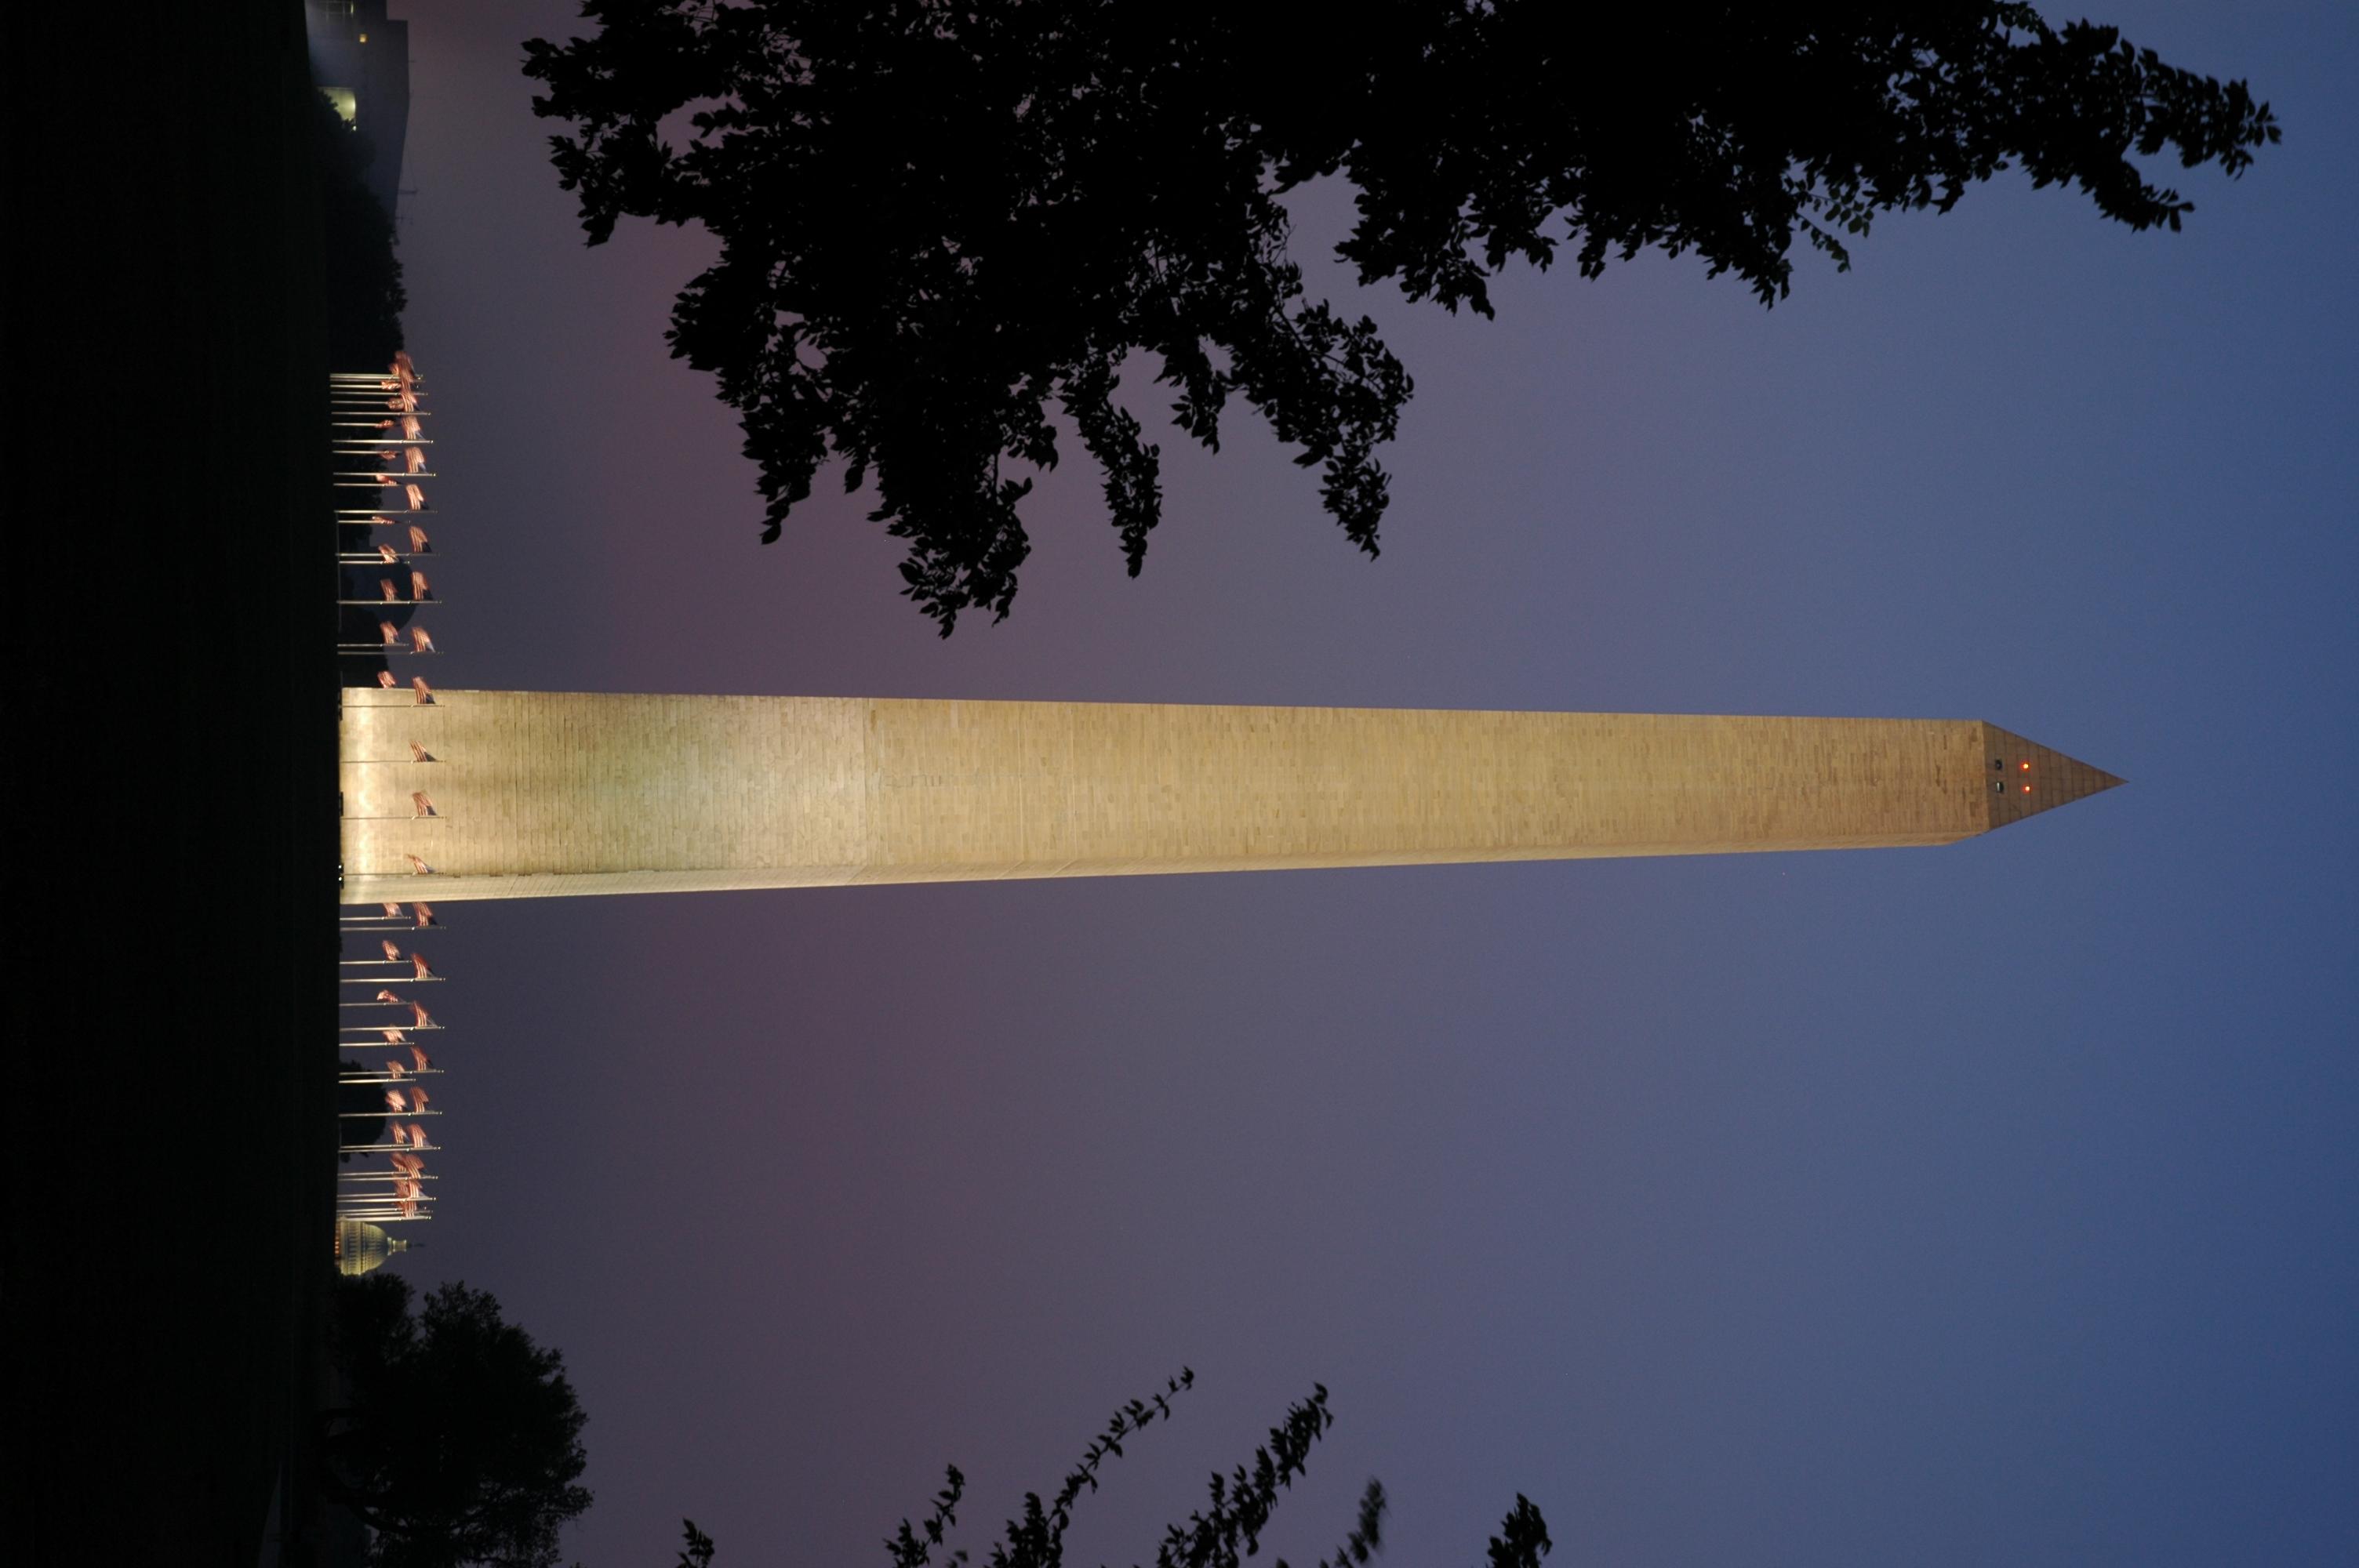 Washington Monument lit at night.